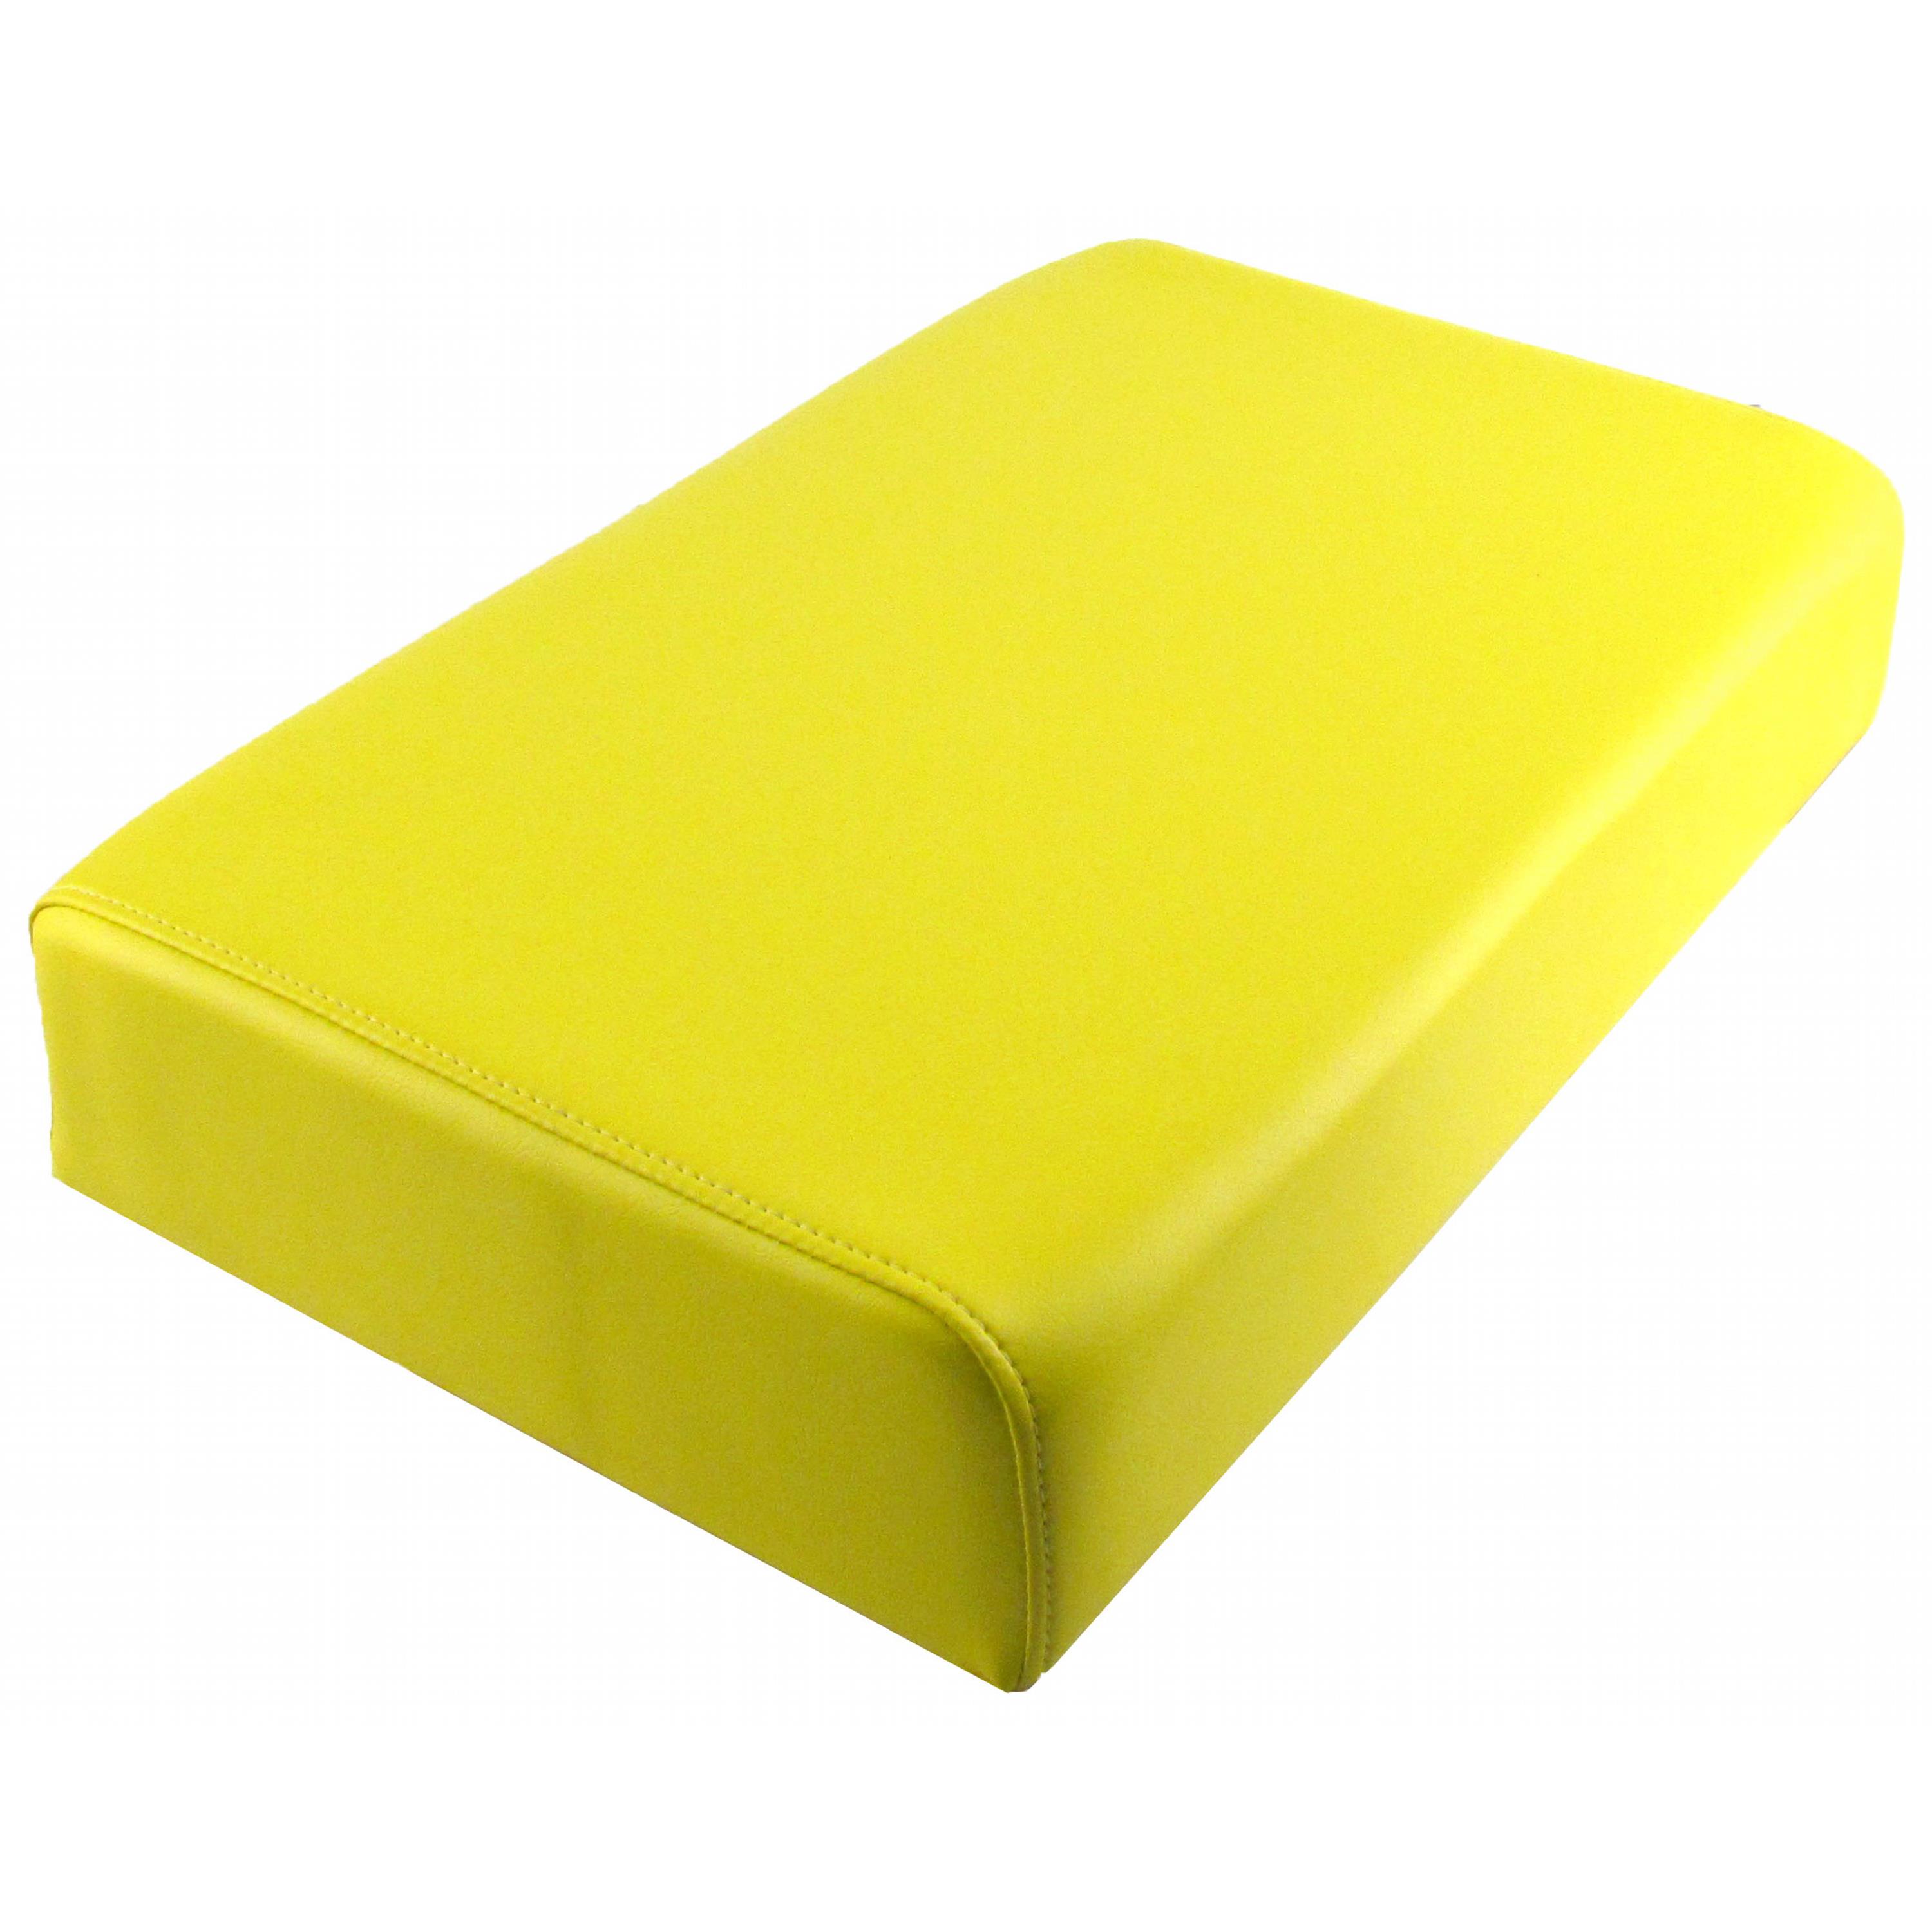 SR26932 | Seat Cushion, Yellow Vinyl, w/ Electric Start | Seats and